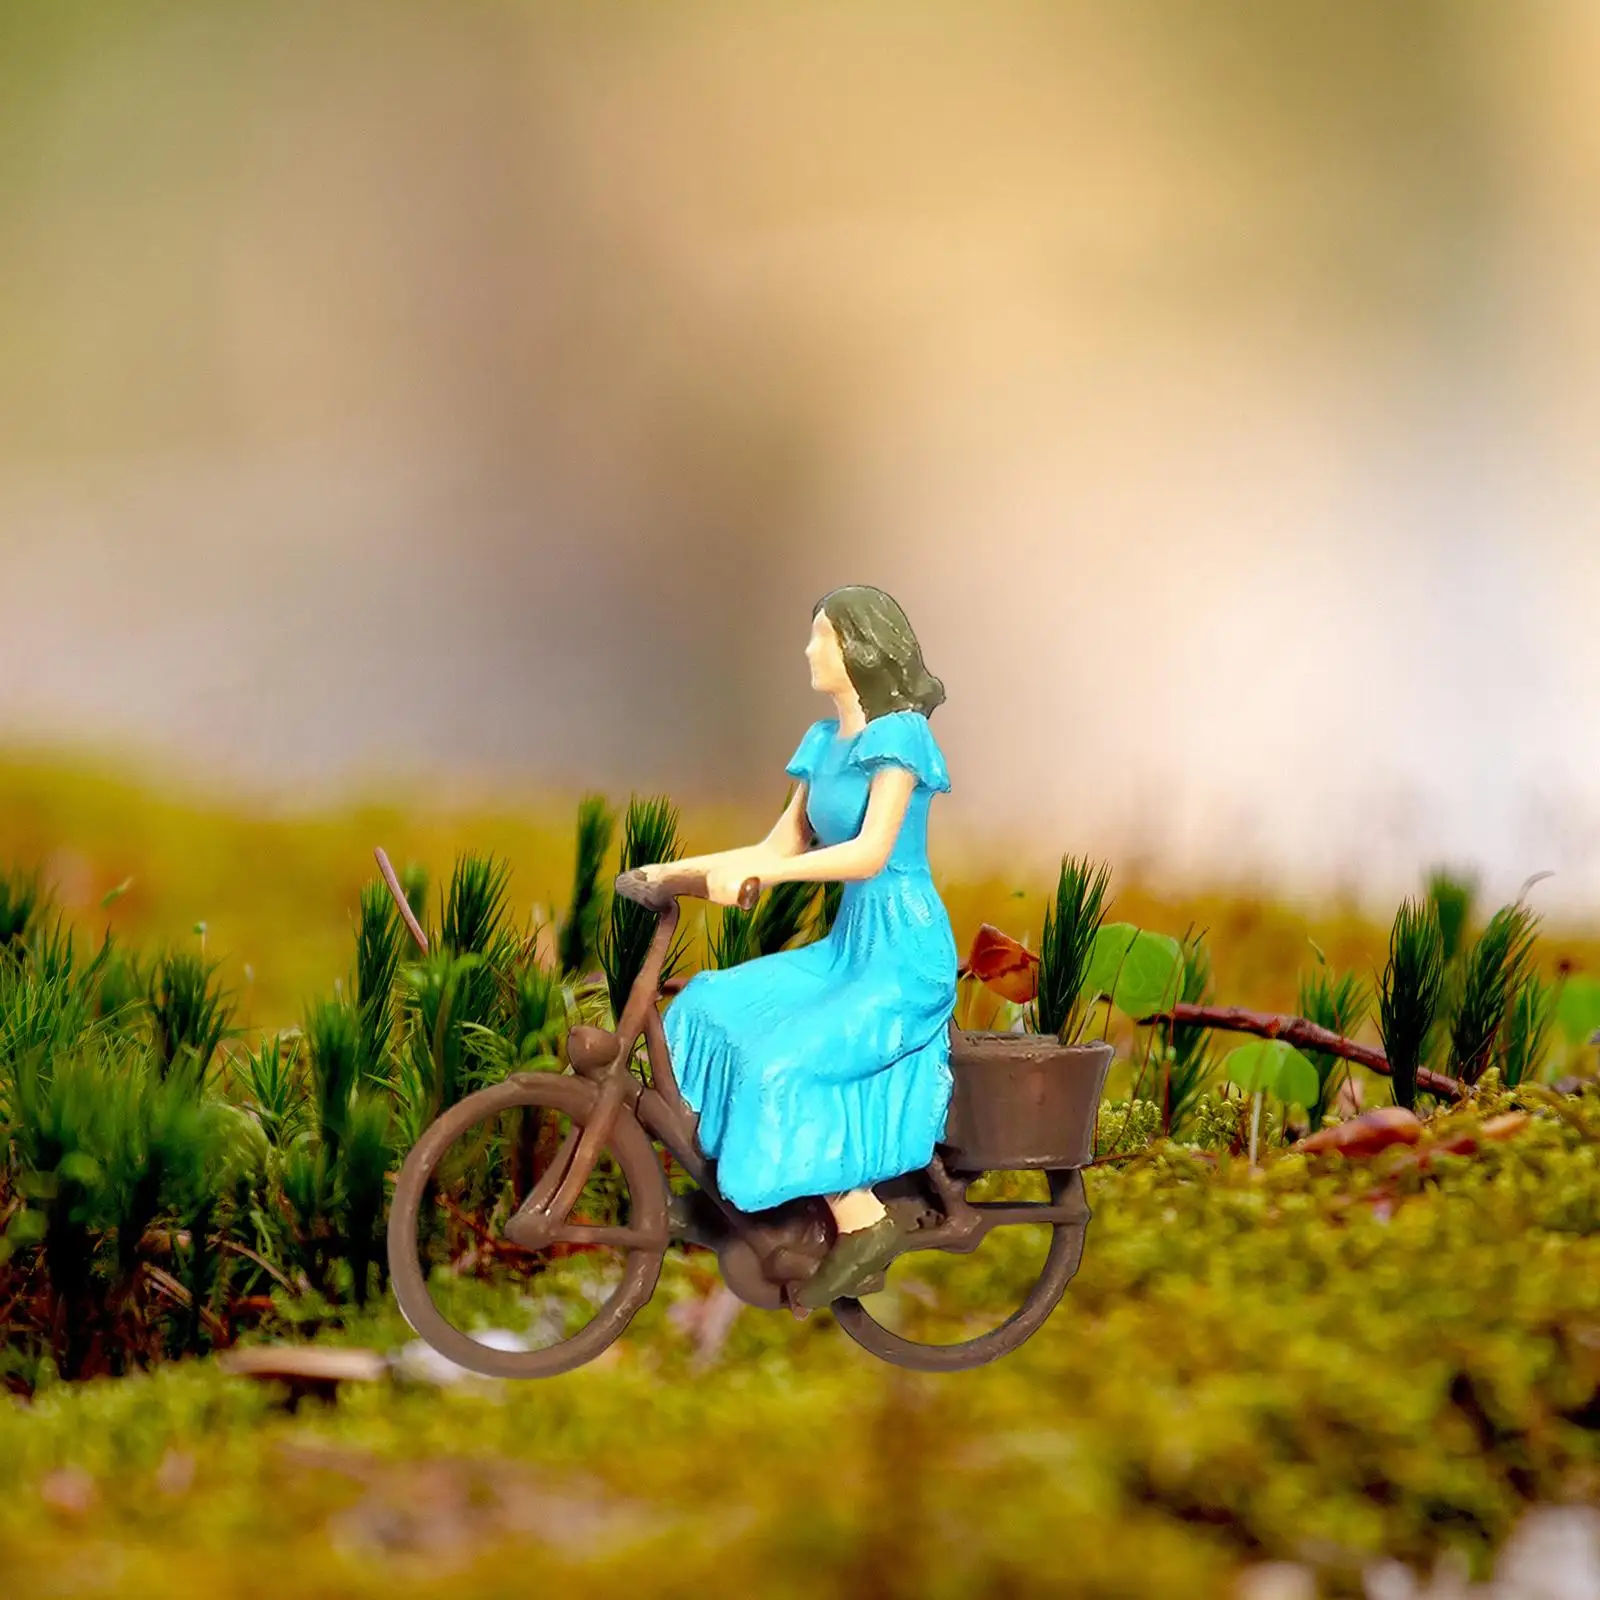 Resin 1/87 Scale Cyclist Figurine, Simulation People Figurines for DIY Scene Decor Diorama Layout